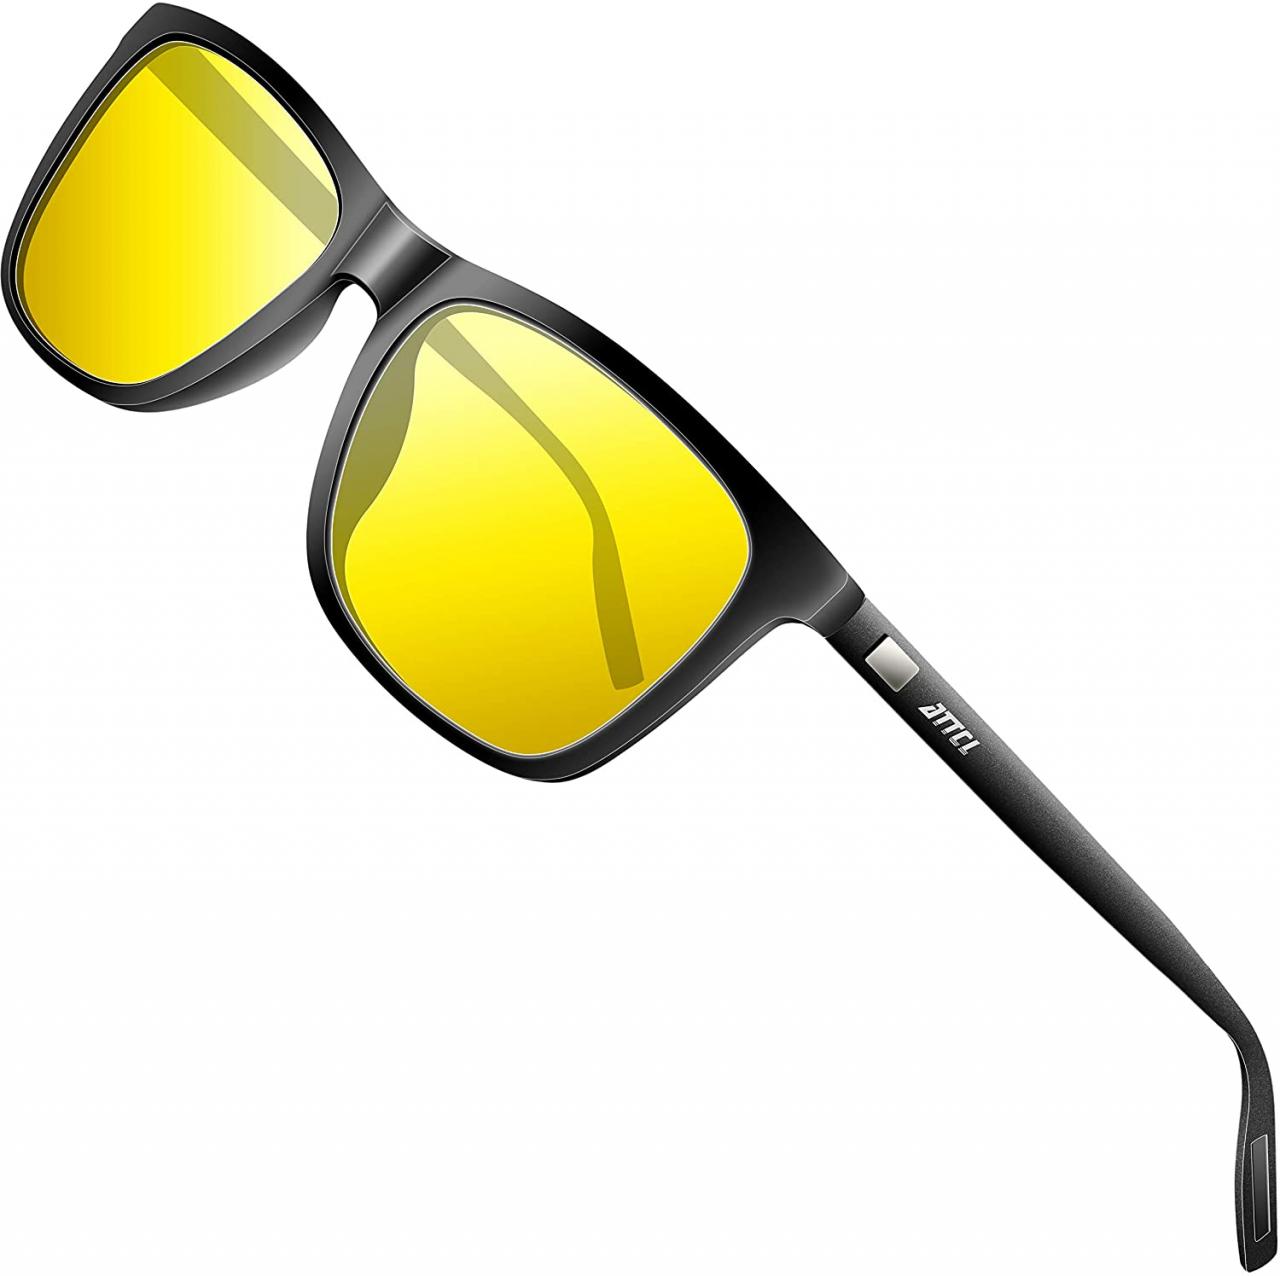 Buy ATTCL Men's Driving Polarized Sunglasses For Men - Al-Mg Metal Frame  Ultra Light Online in Hong Kong. B07M9T96B5